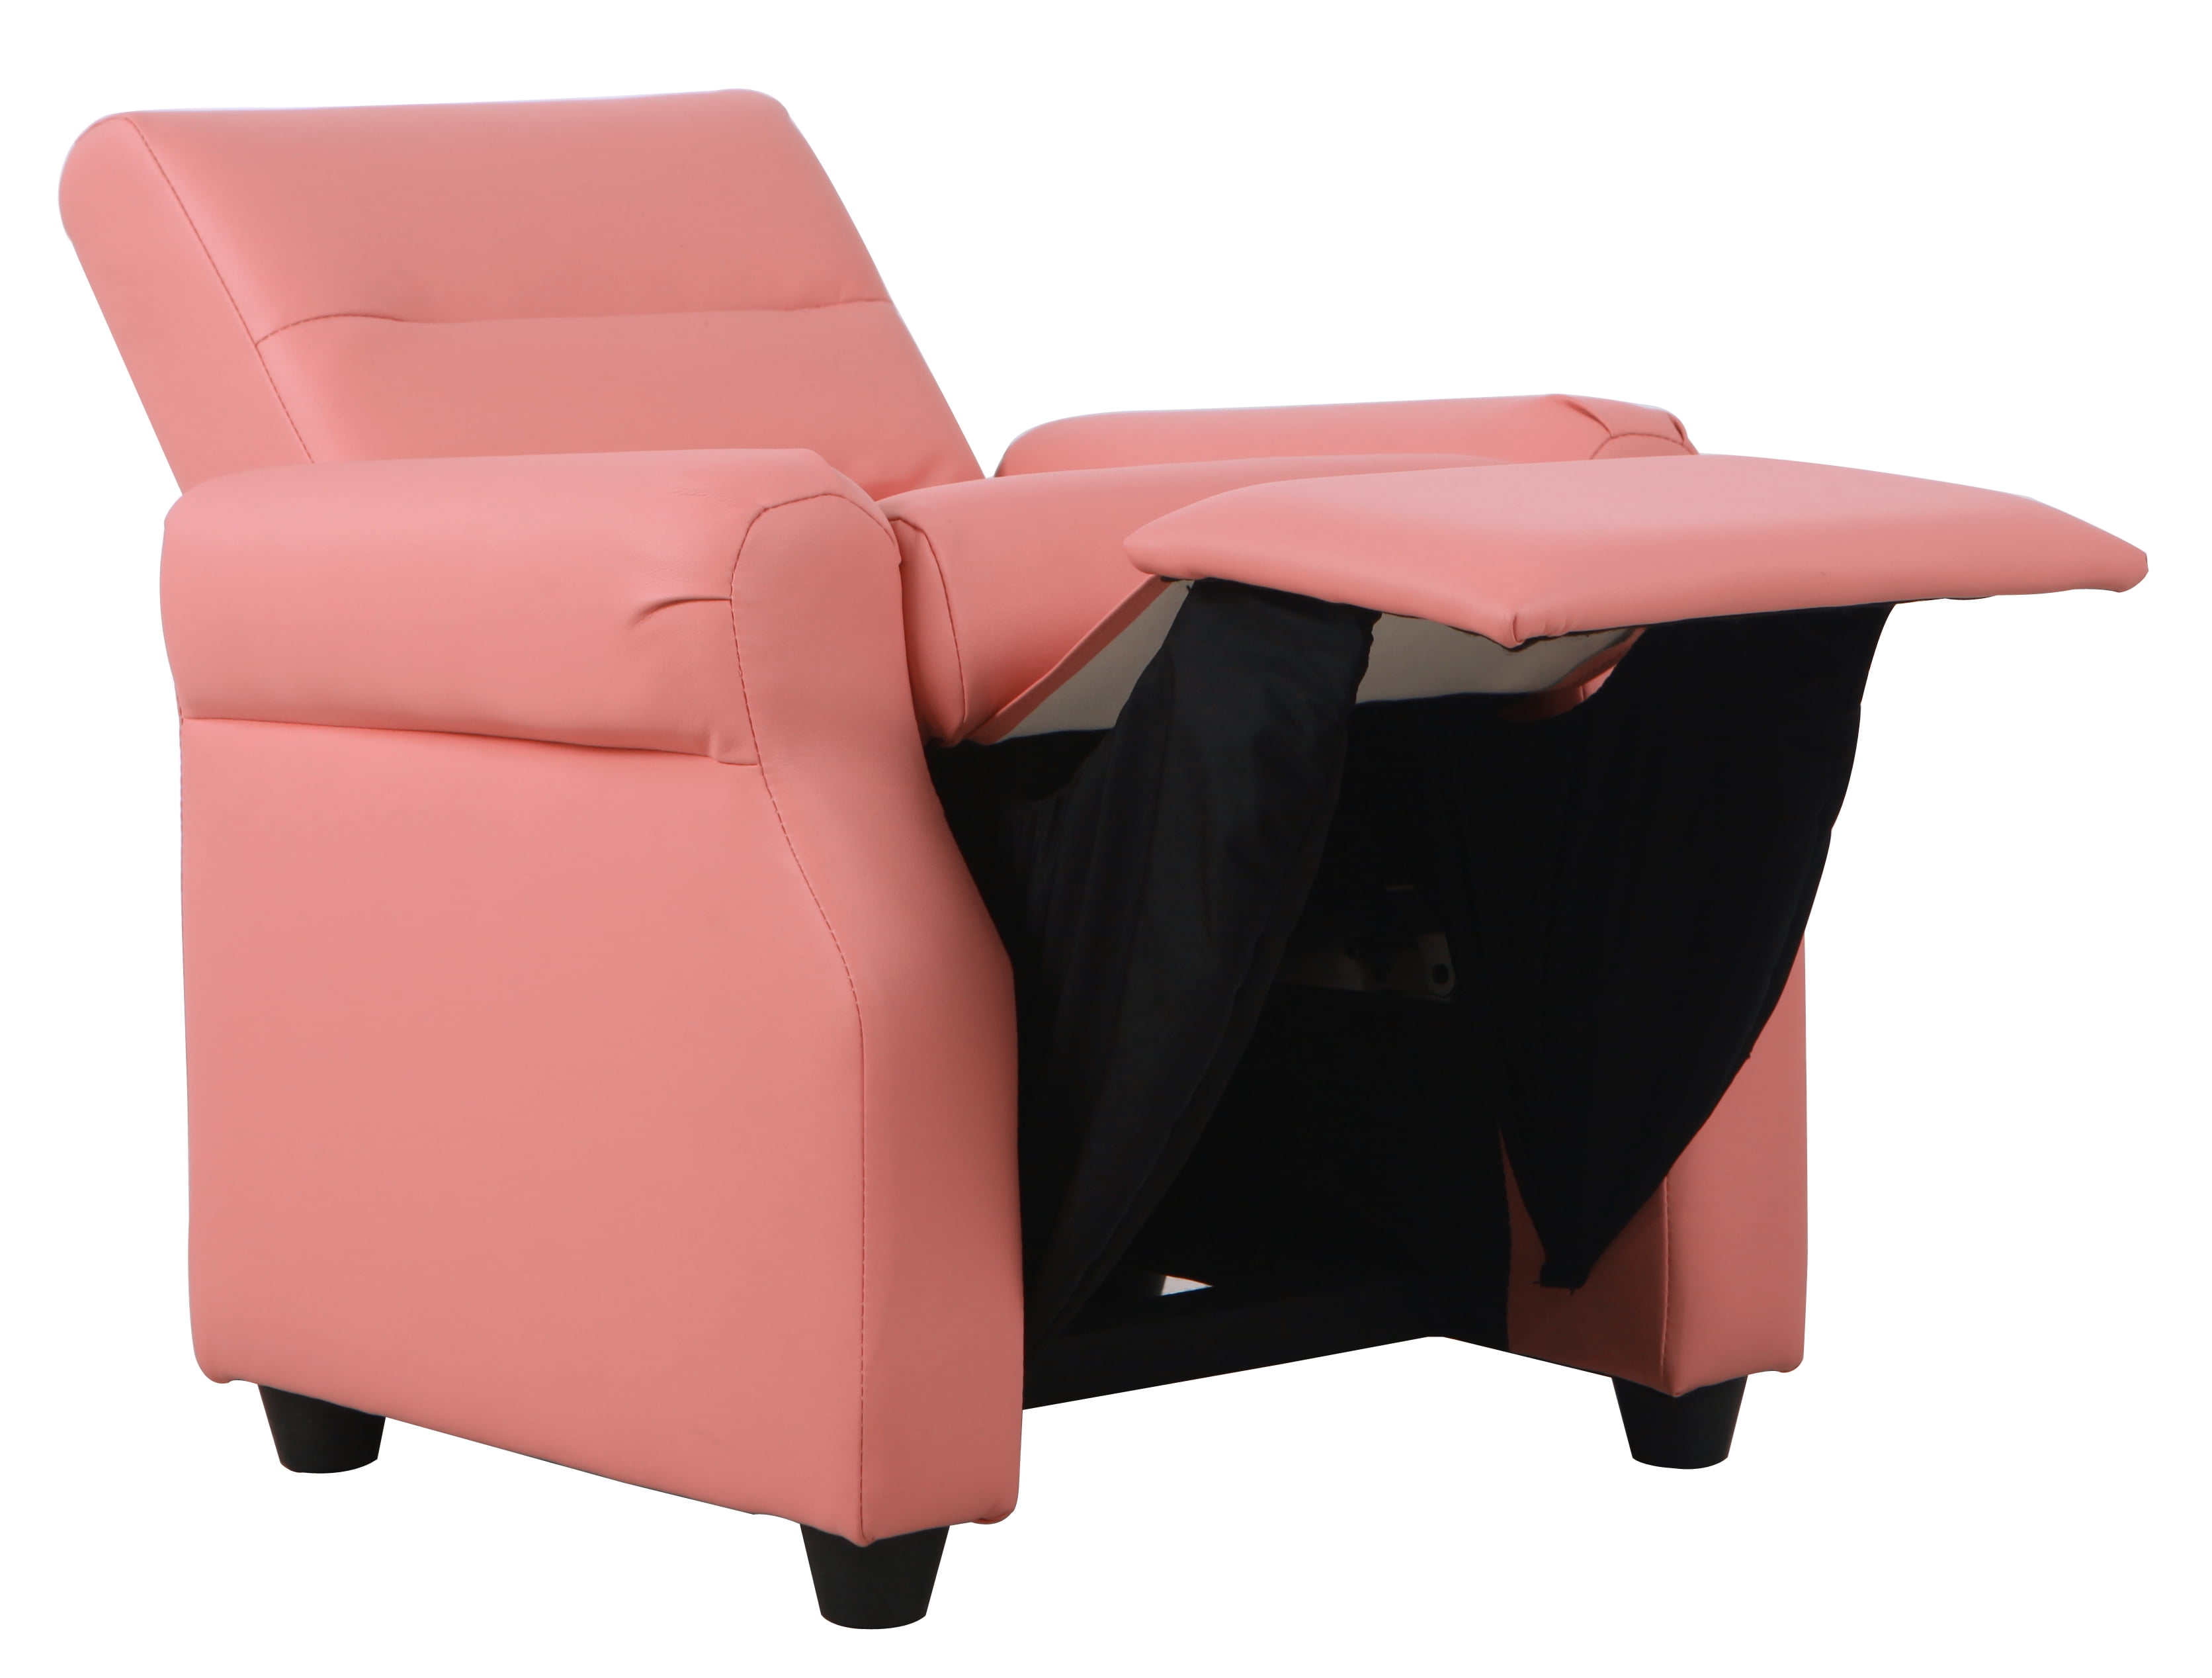 kids pink recliner